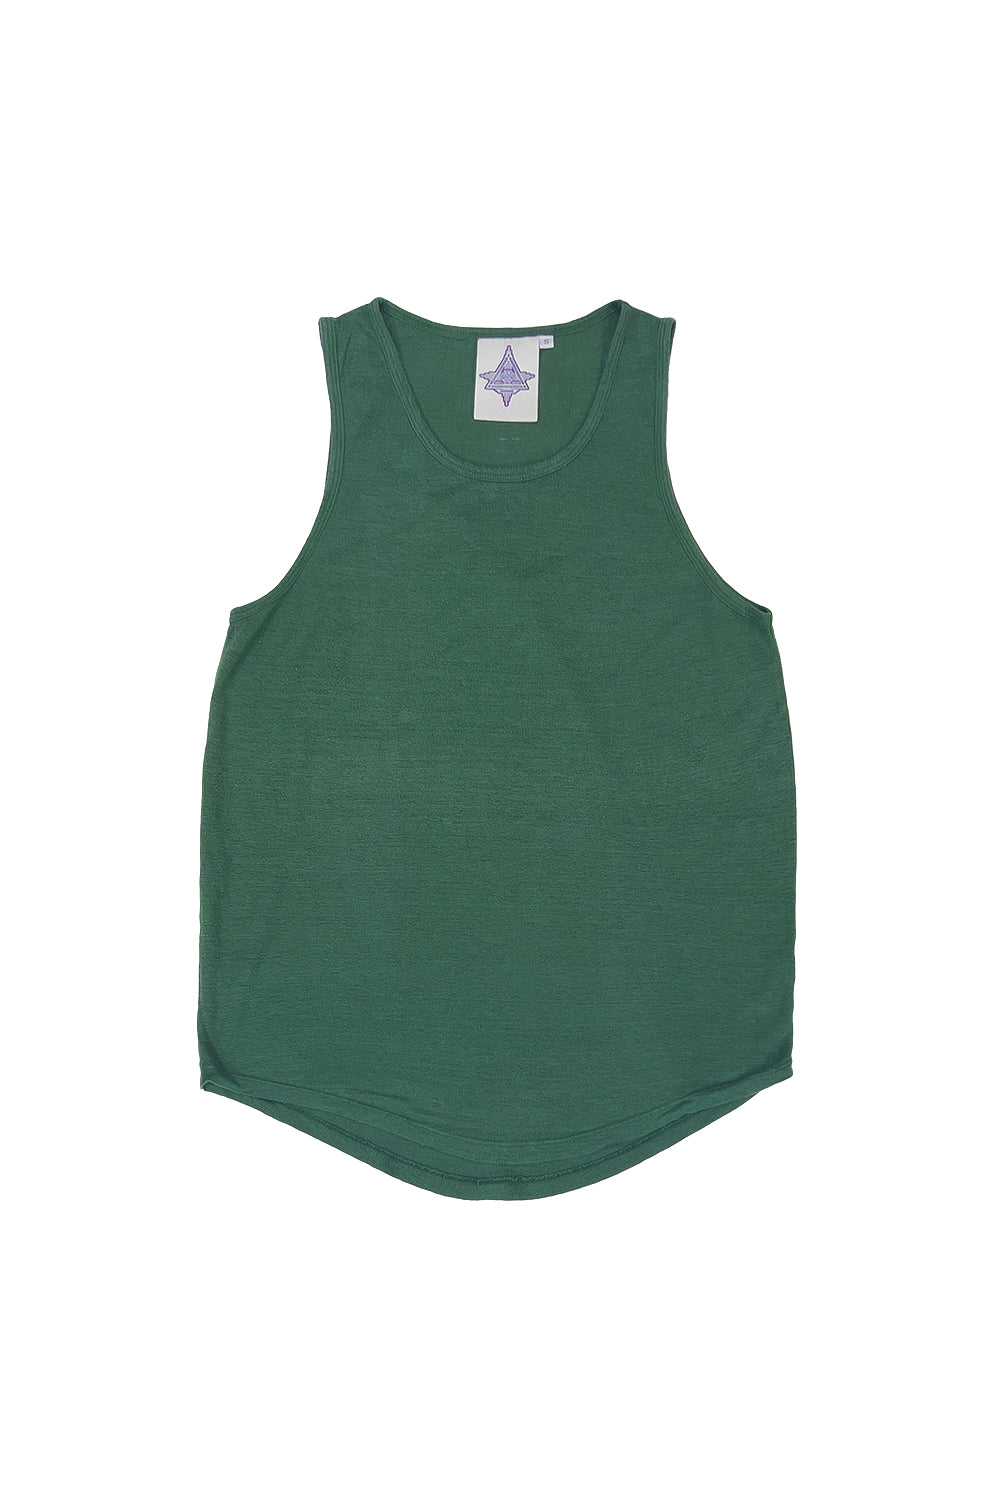 Playa 100% Tank Top | Jungmaven Hemp Clothing & Accessories / Color: Hunter Green